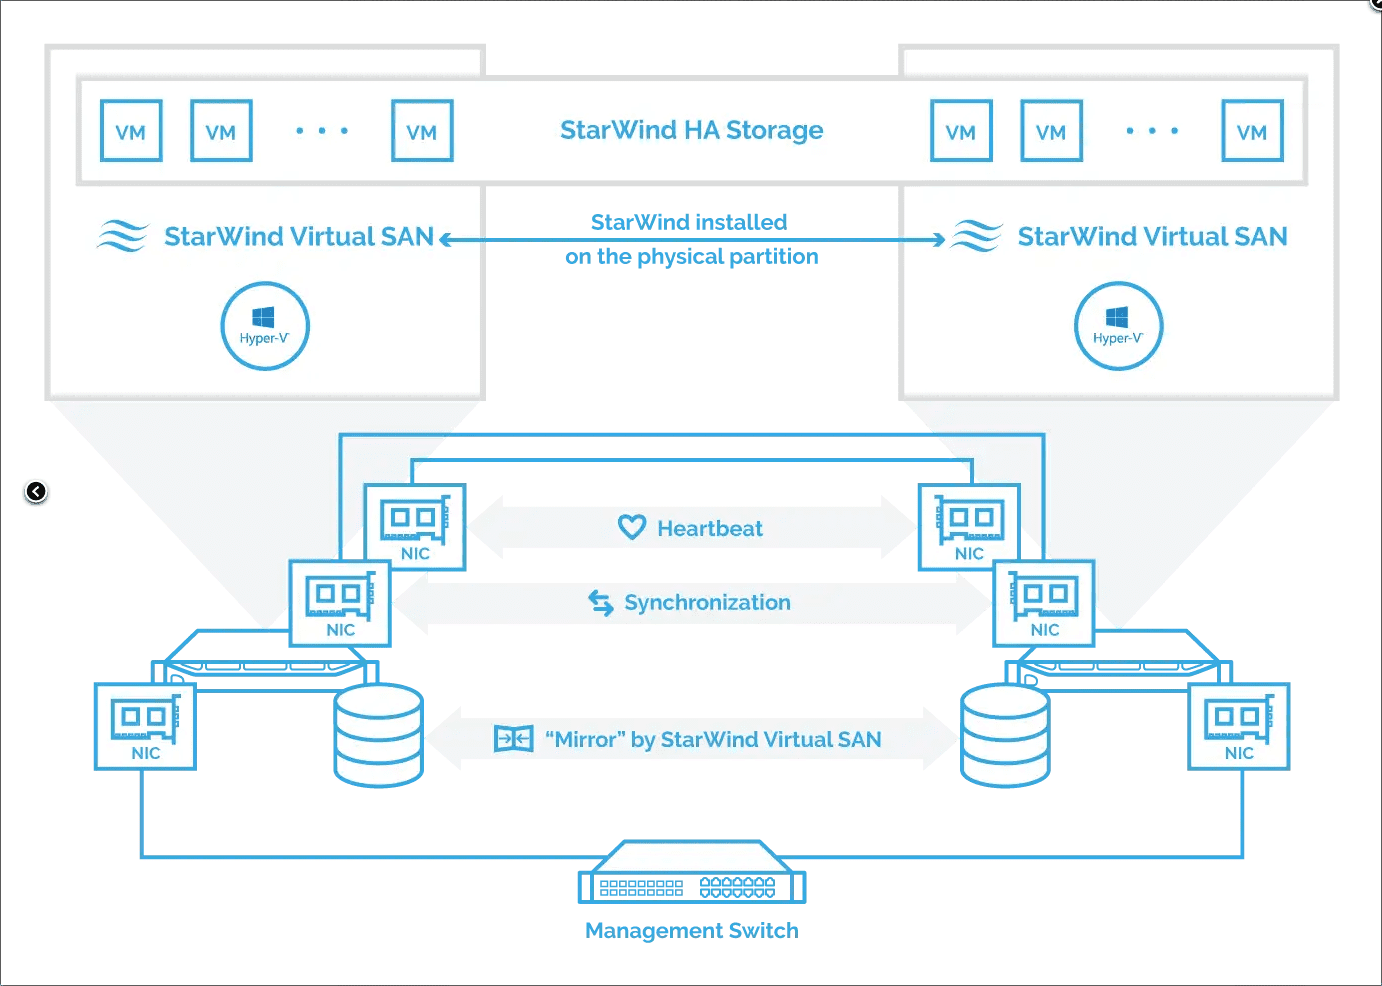 Overview of StarWind HA Storage architecture